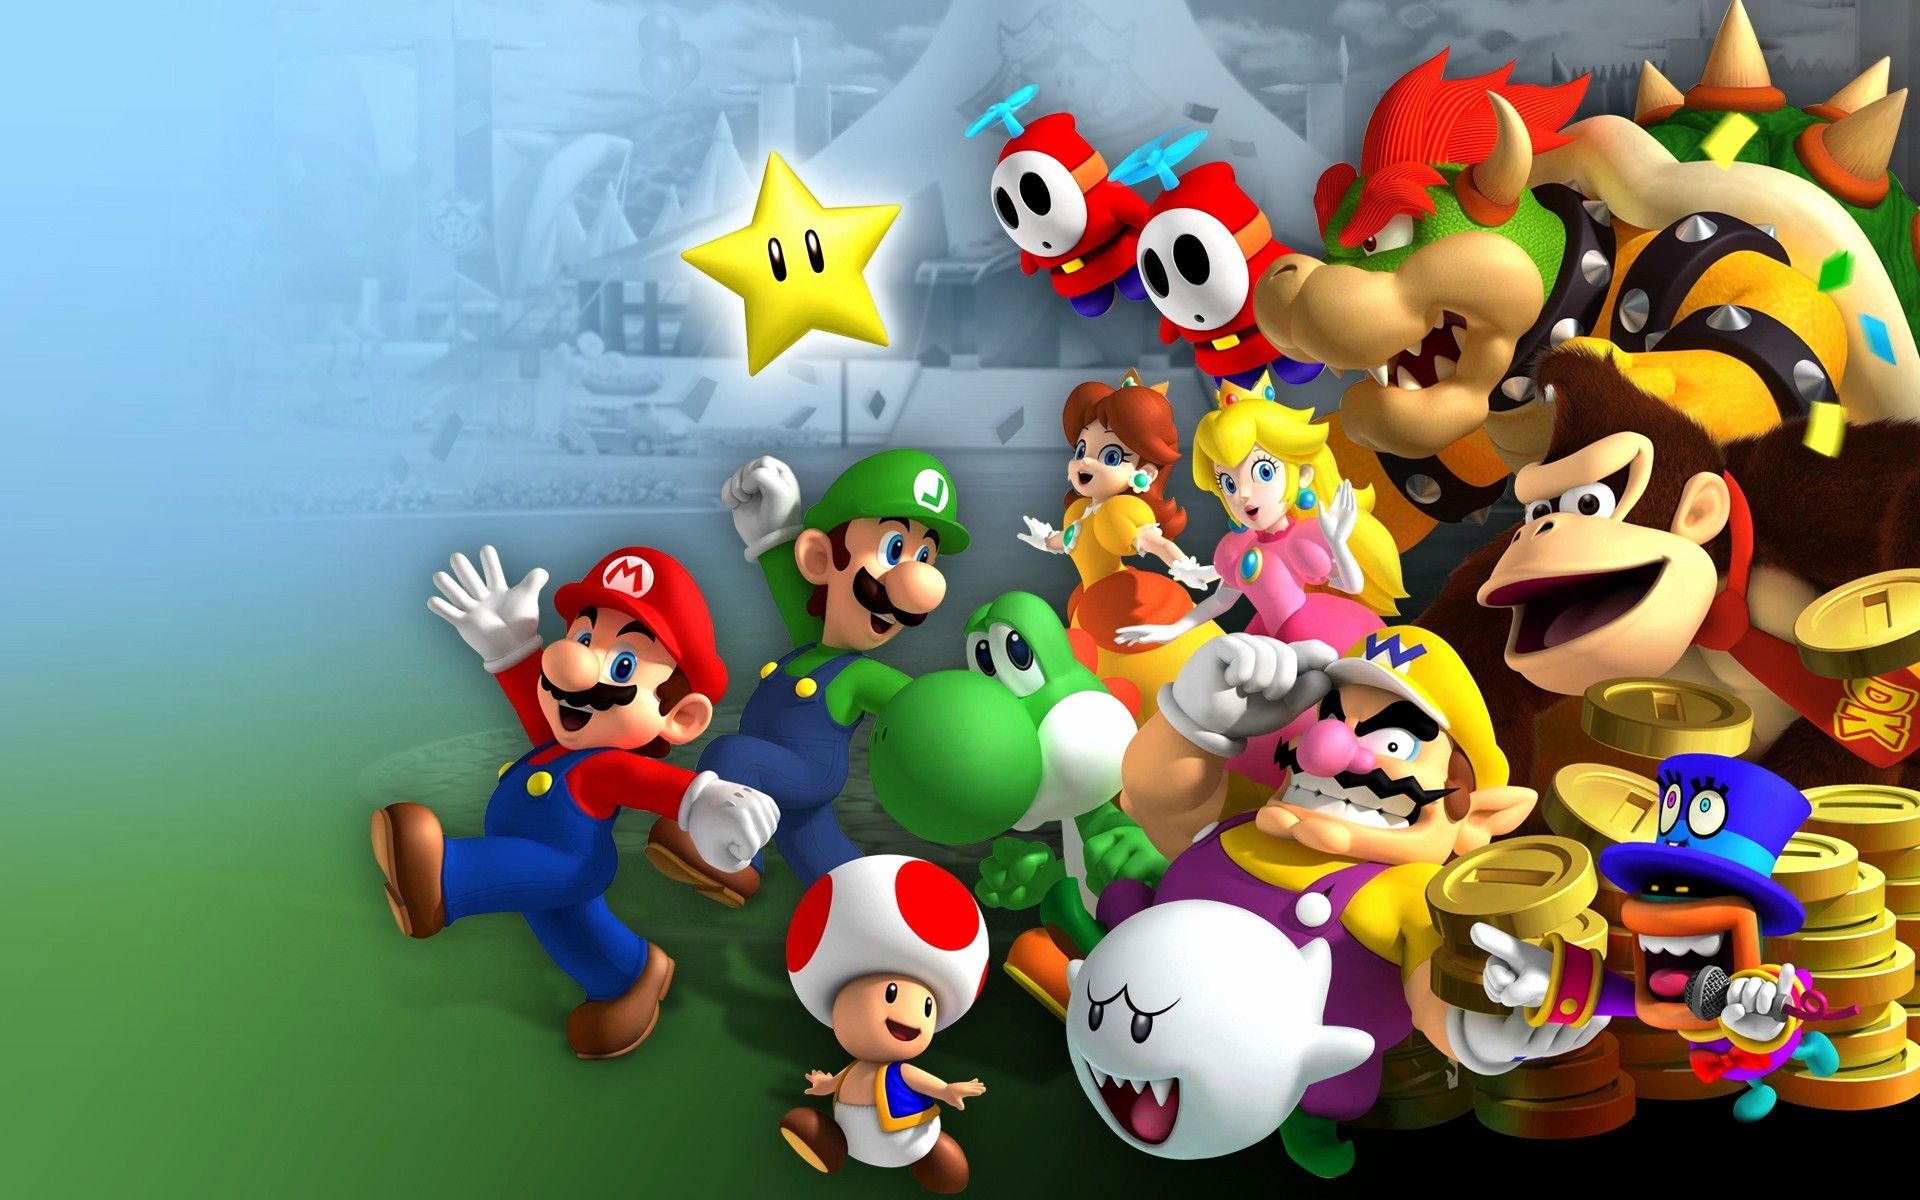 Nintendo Desktop Wallpaper. Character wallpaper, Mario, Mario and luigi